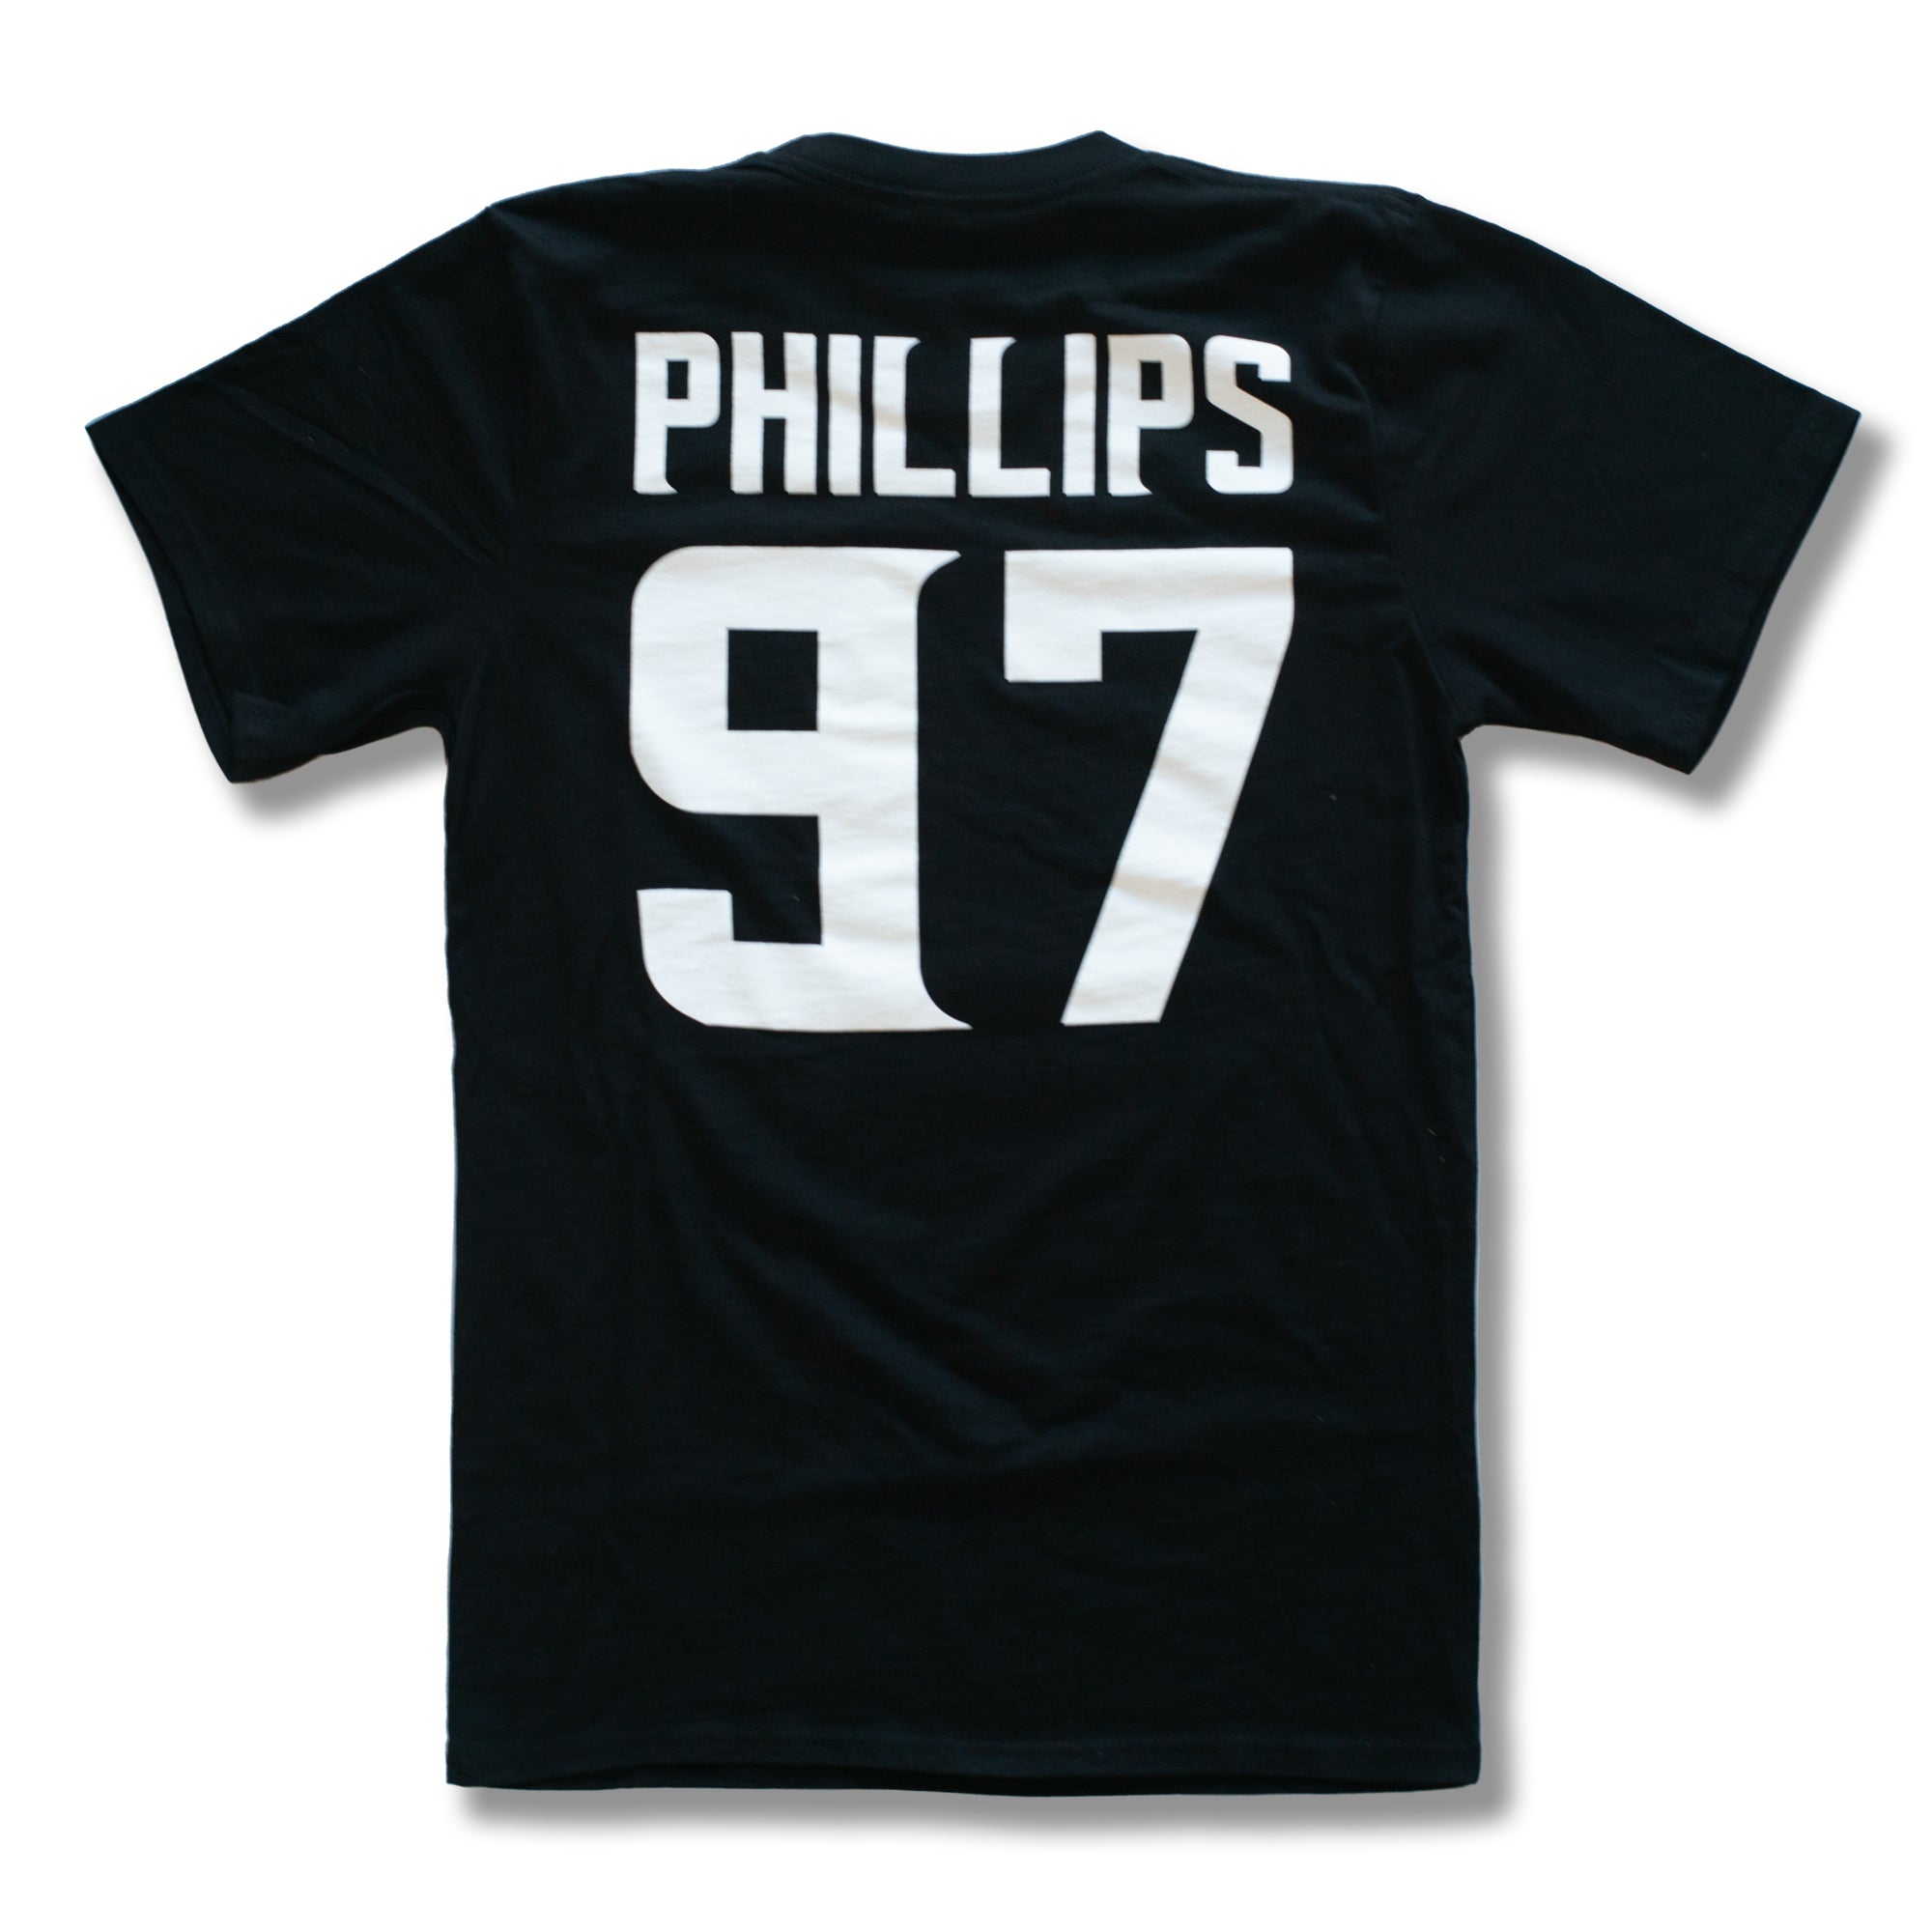 Black cotton tshirt with "Phillips 97" logo